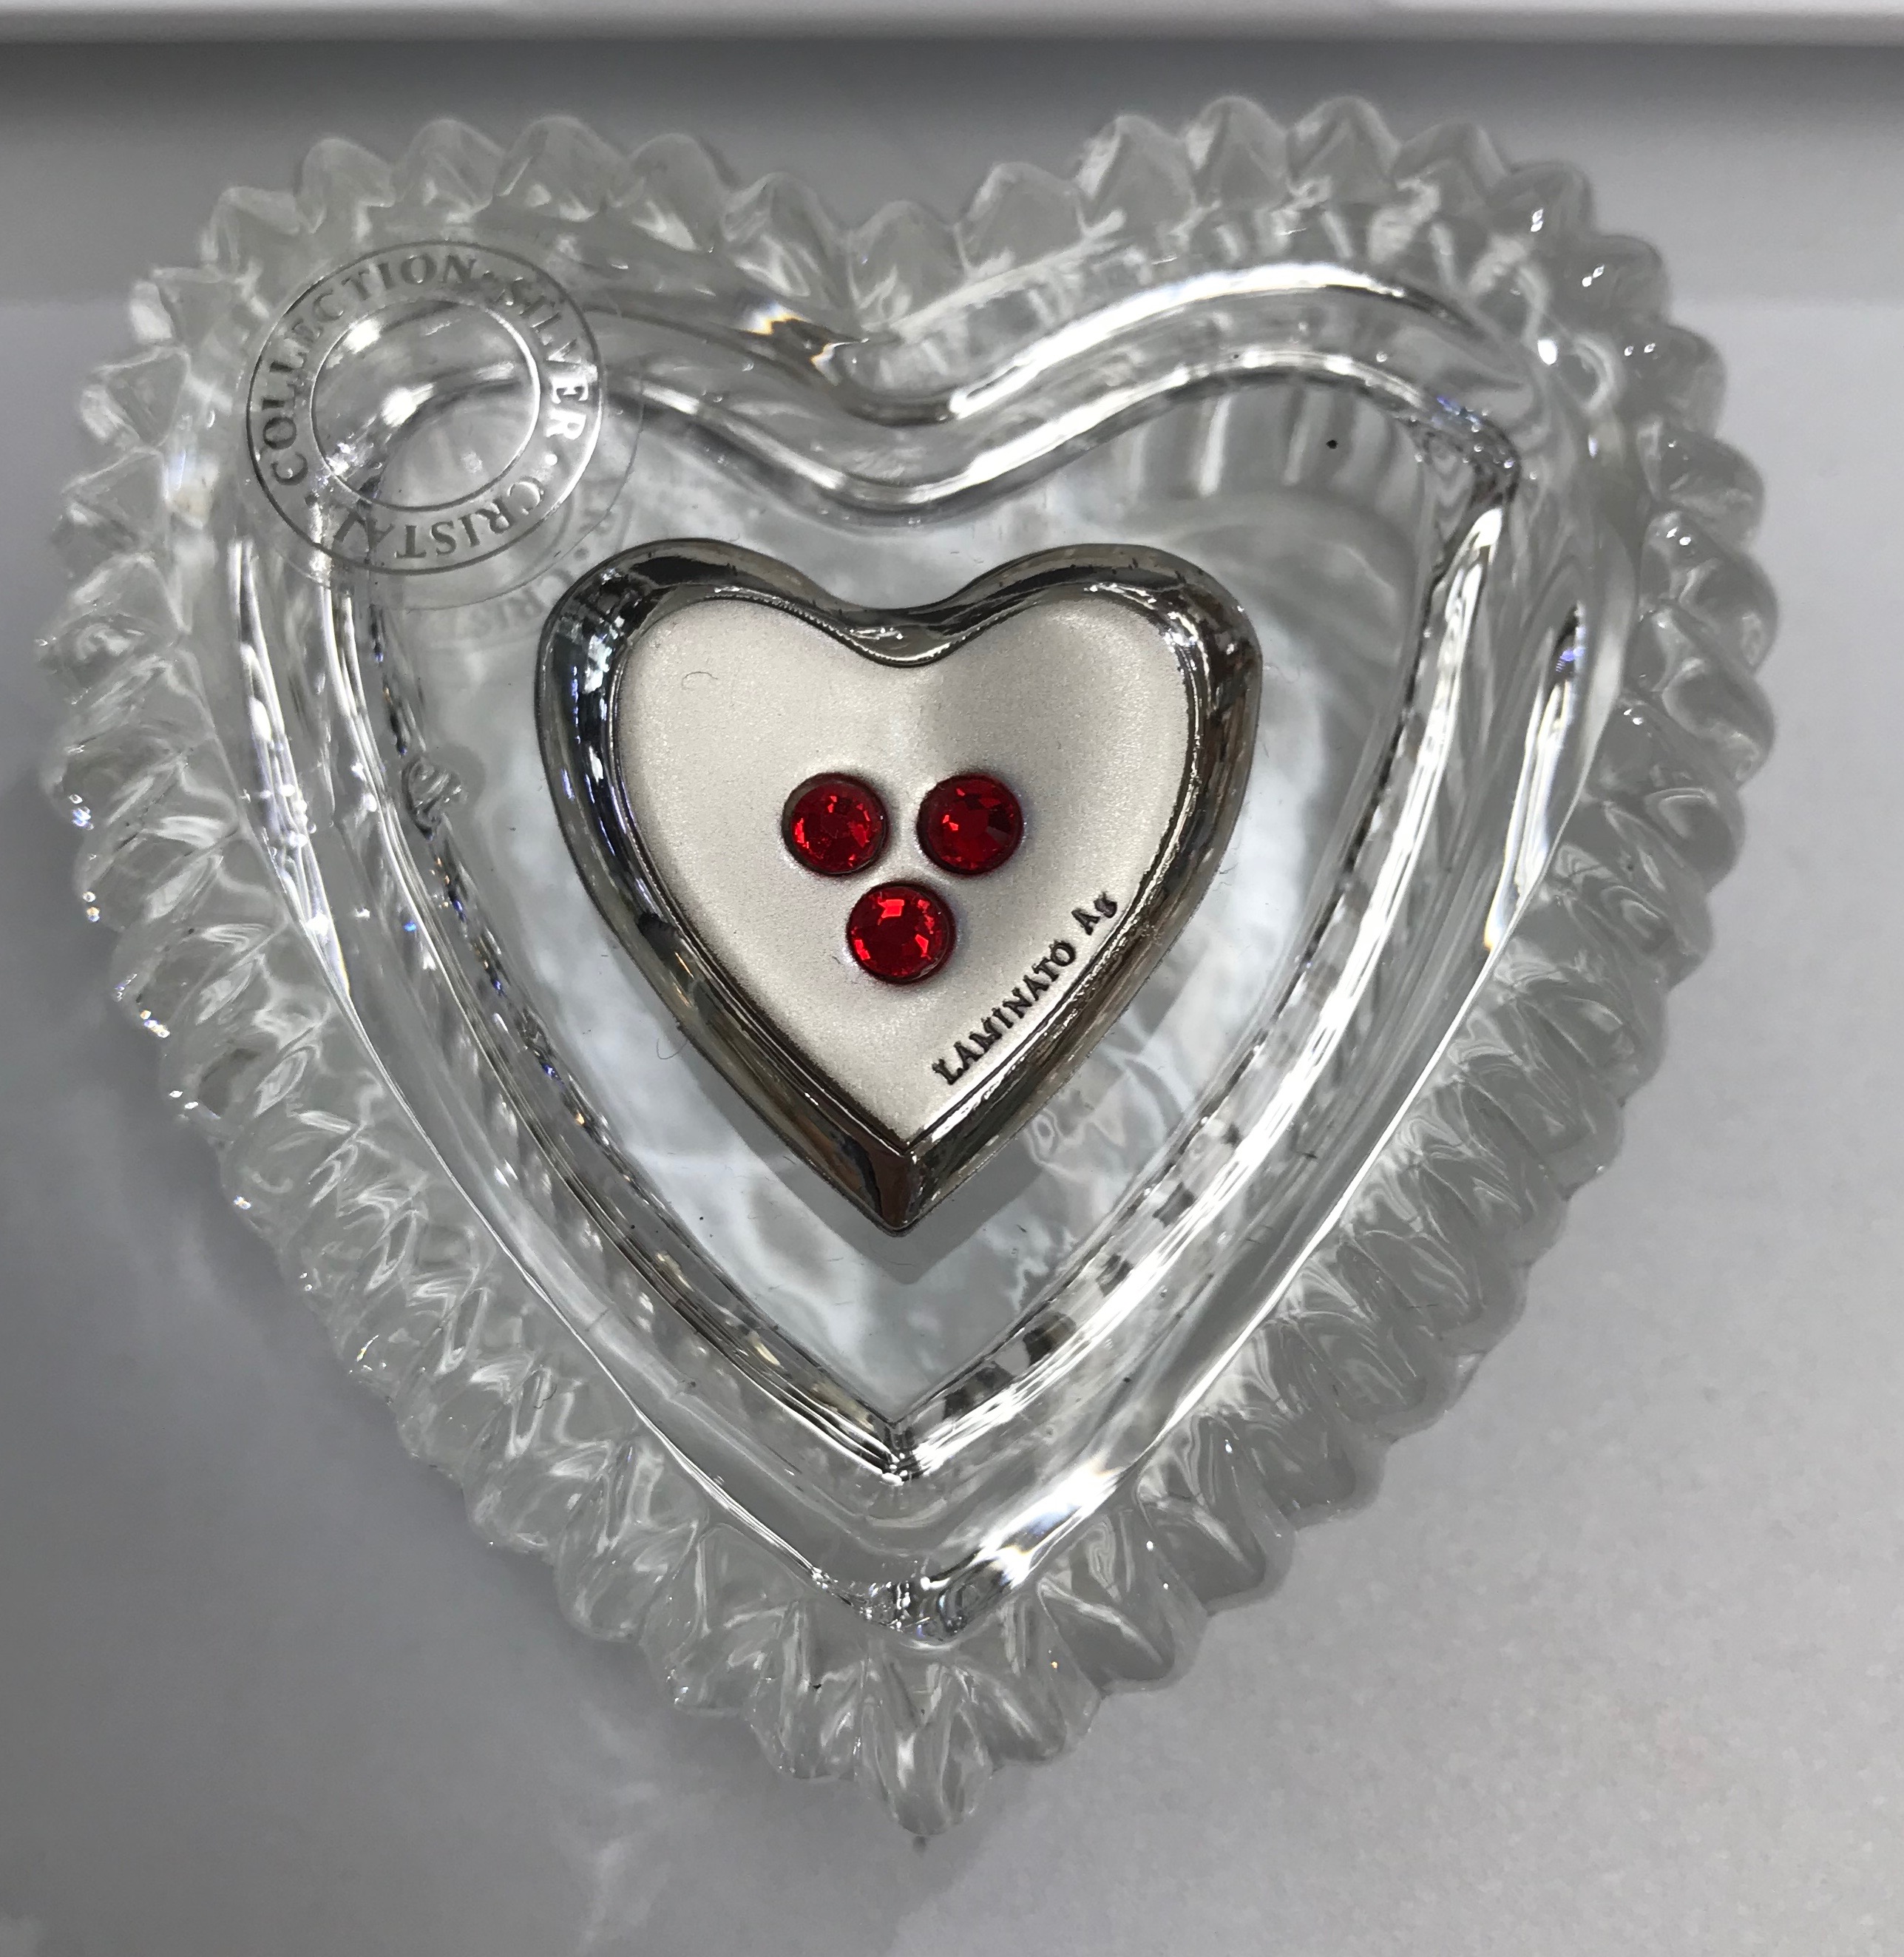 Crystal heart box - Item # 14615